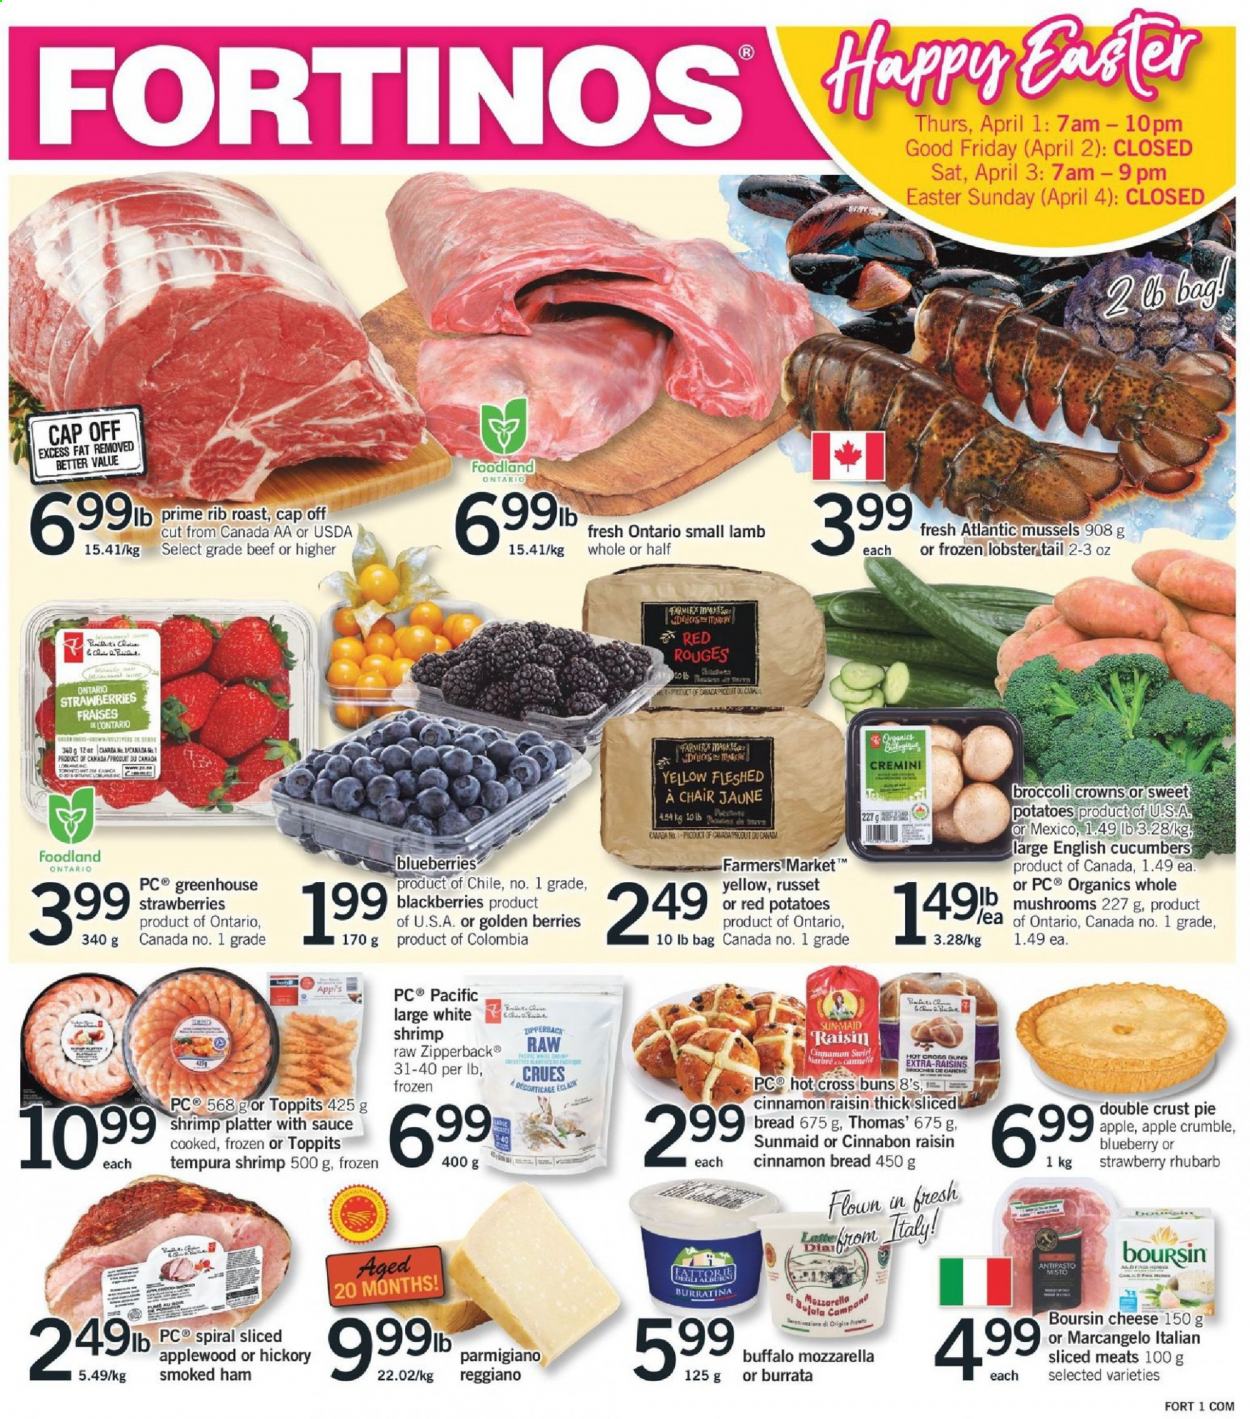 thumbnail - Circulaire Fortinos - 25 Mars 2021 - 31 Mars 2021 - Produits soldés - mozzarella, burrata, Boursin, fraises, Apple, raisins. Page 1.